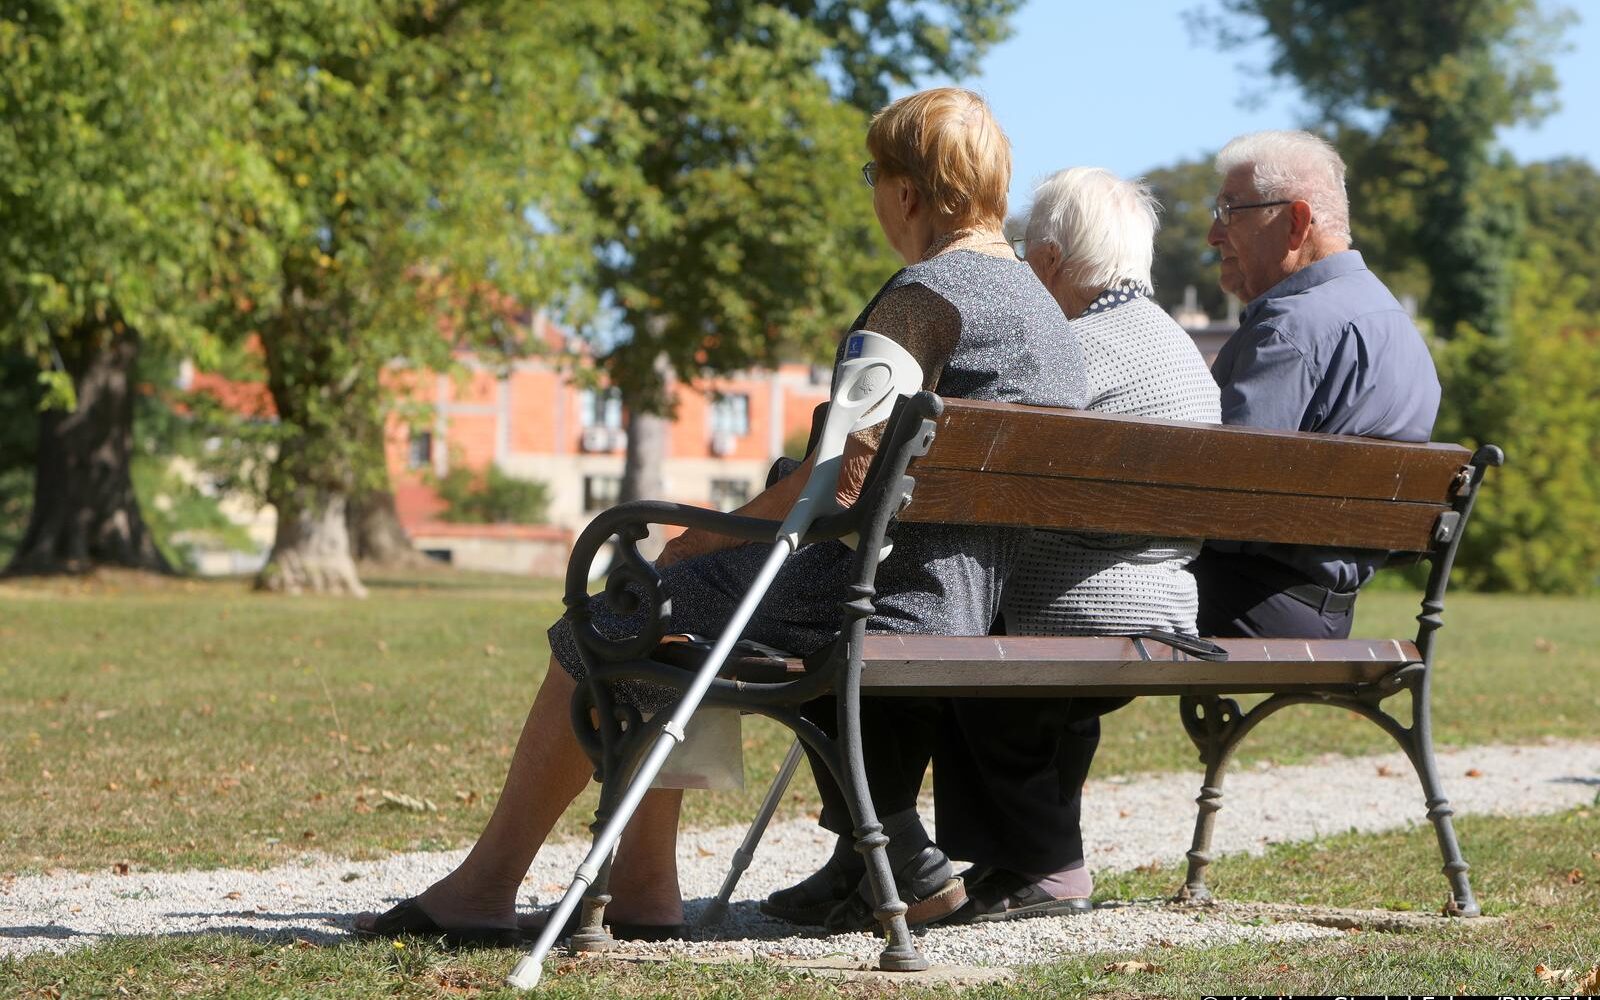 Penzioni sistem troje penzionera sjedi na klupi u parku